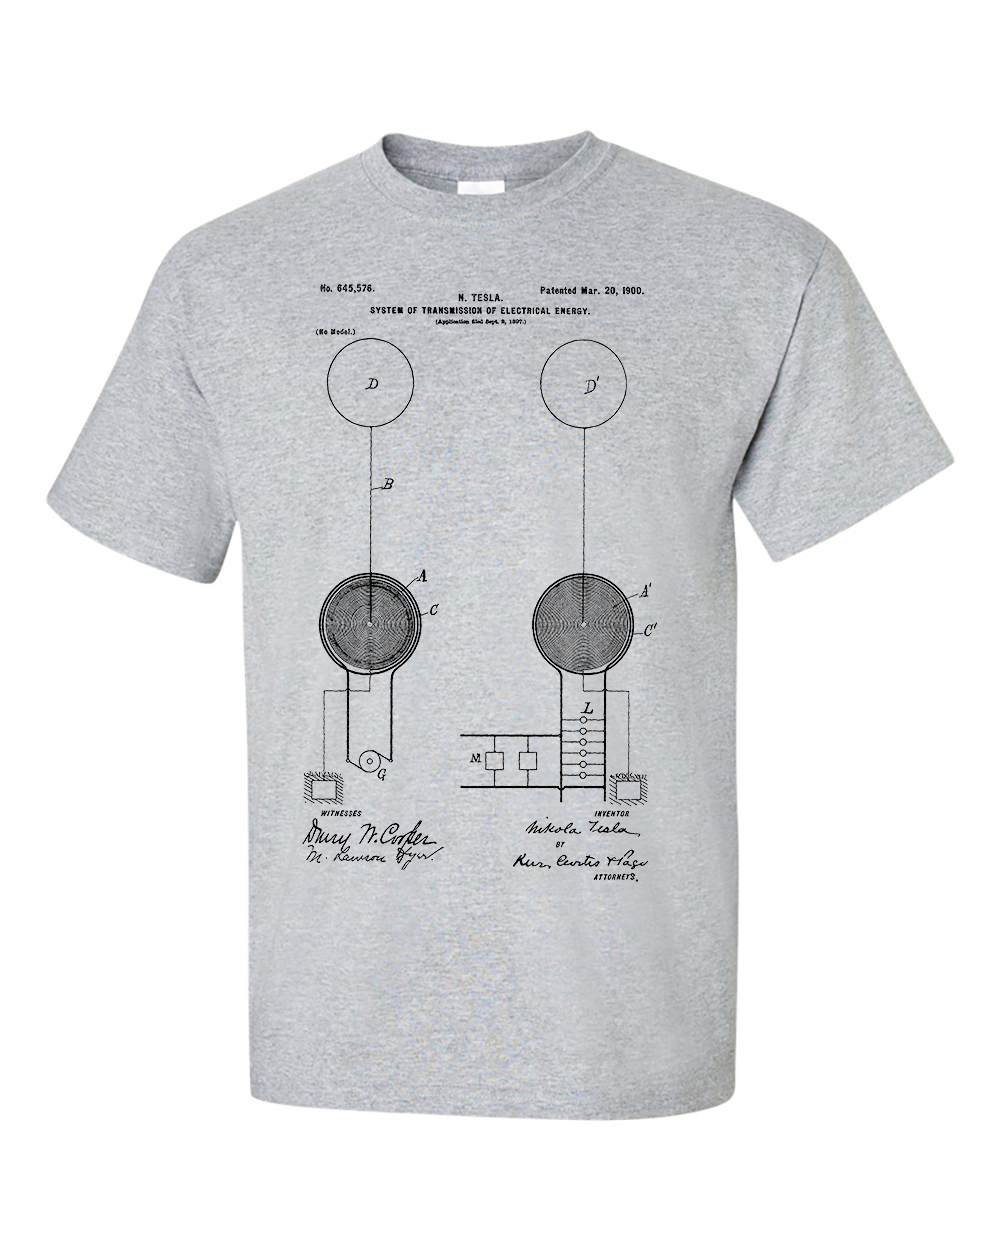 Nikola Tesla System of transmission of electrical energy Wireless Energy Patent Blueprint T-Shirt